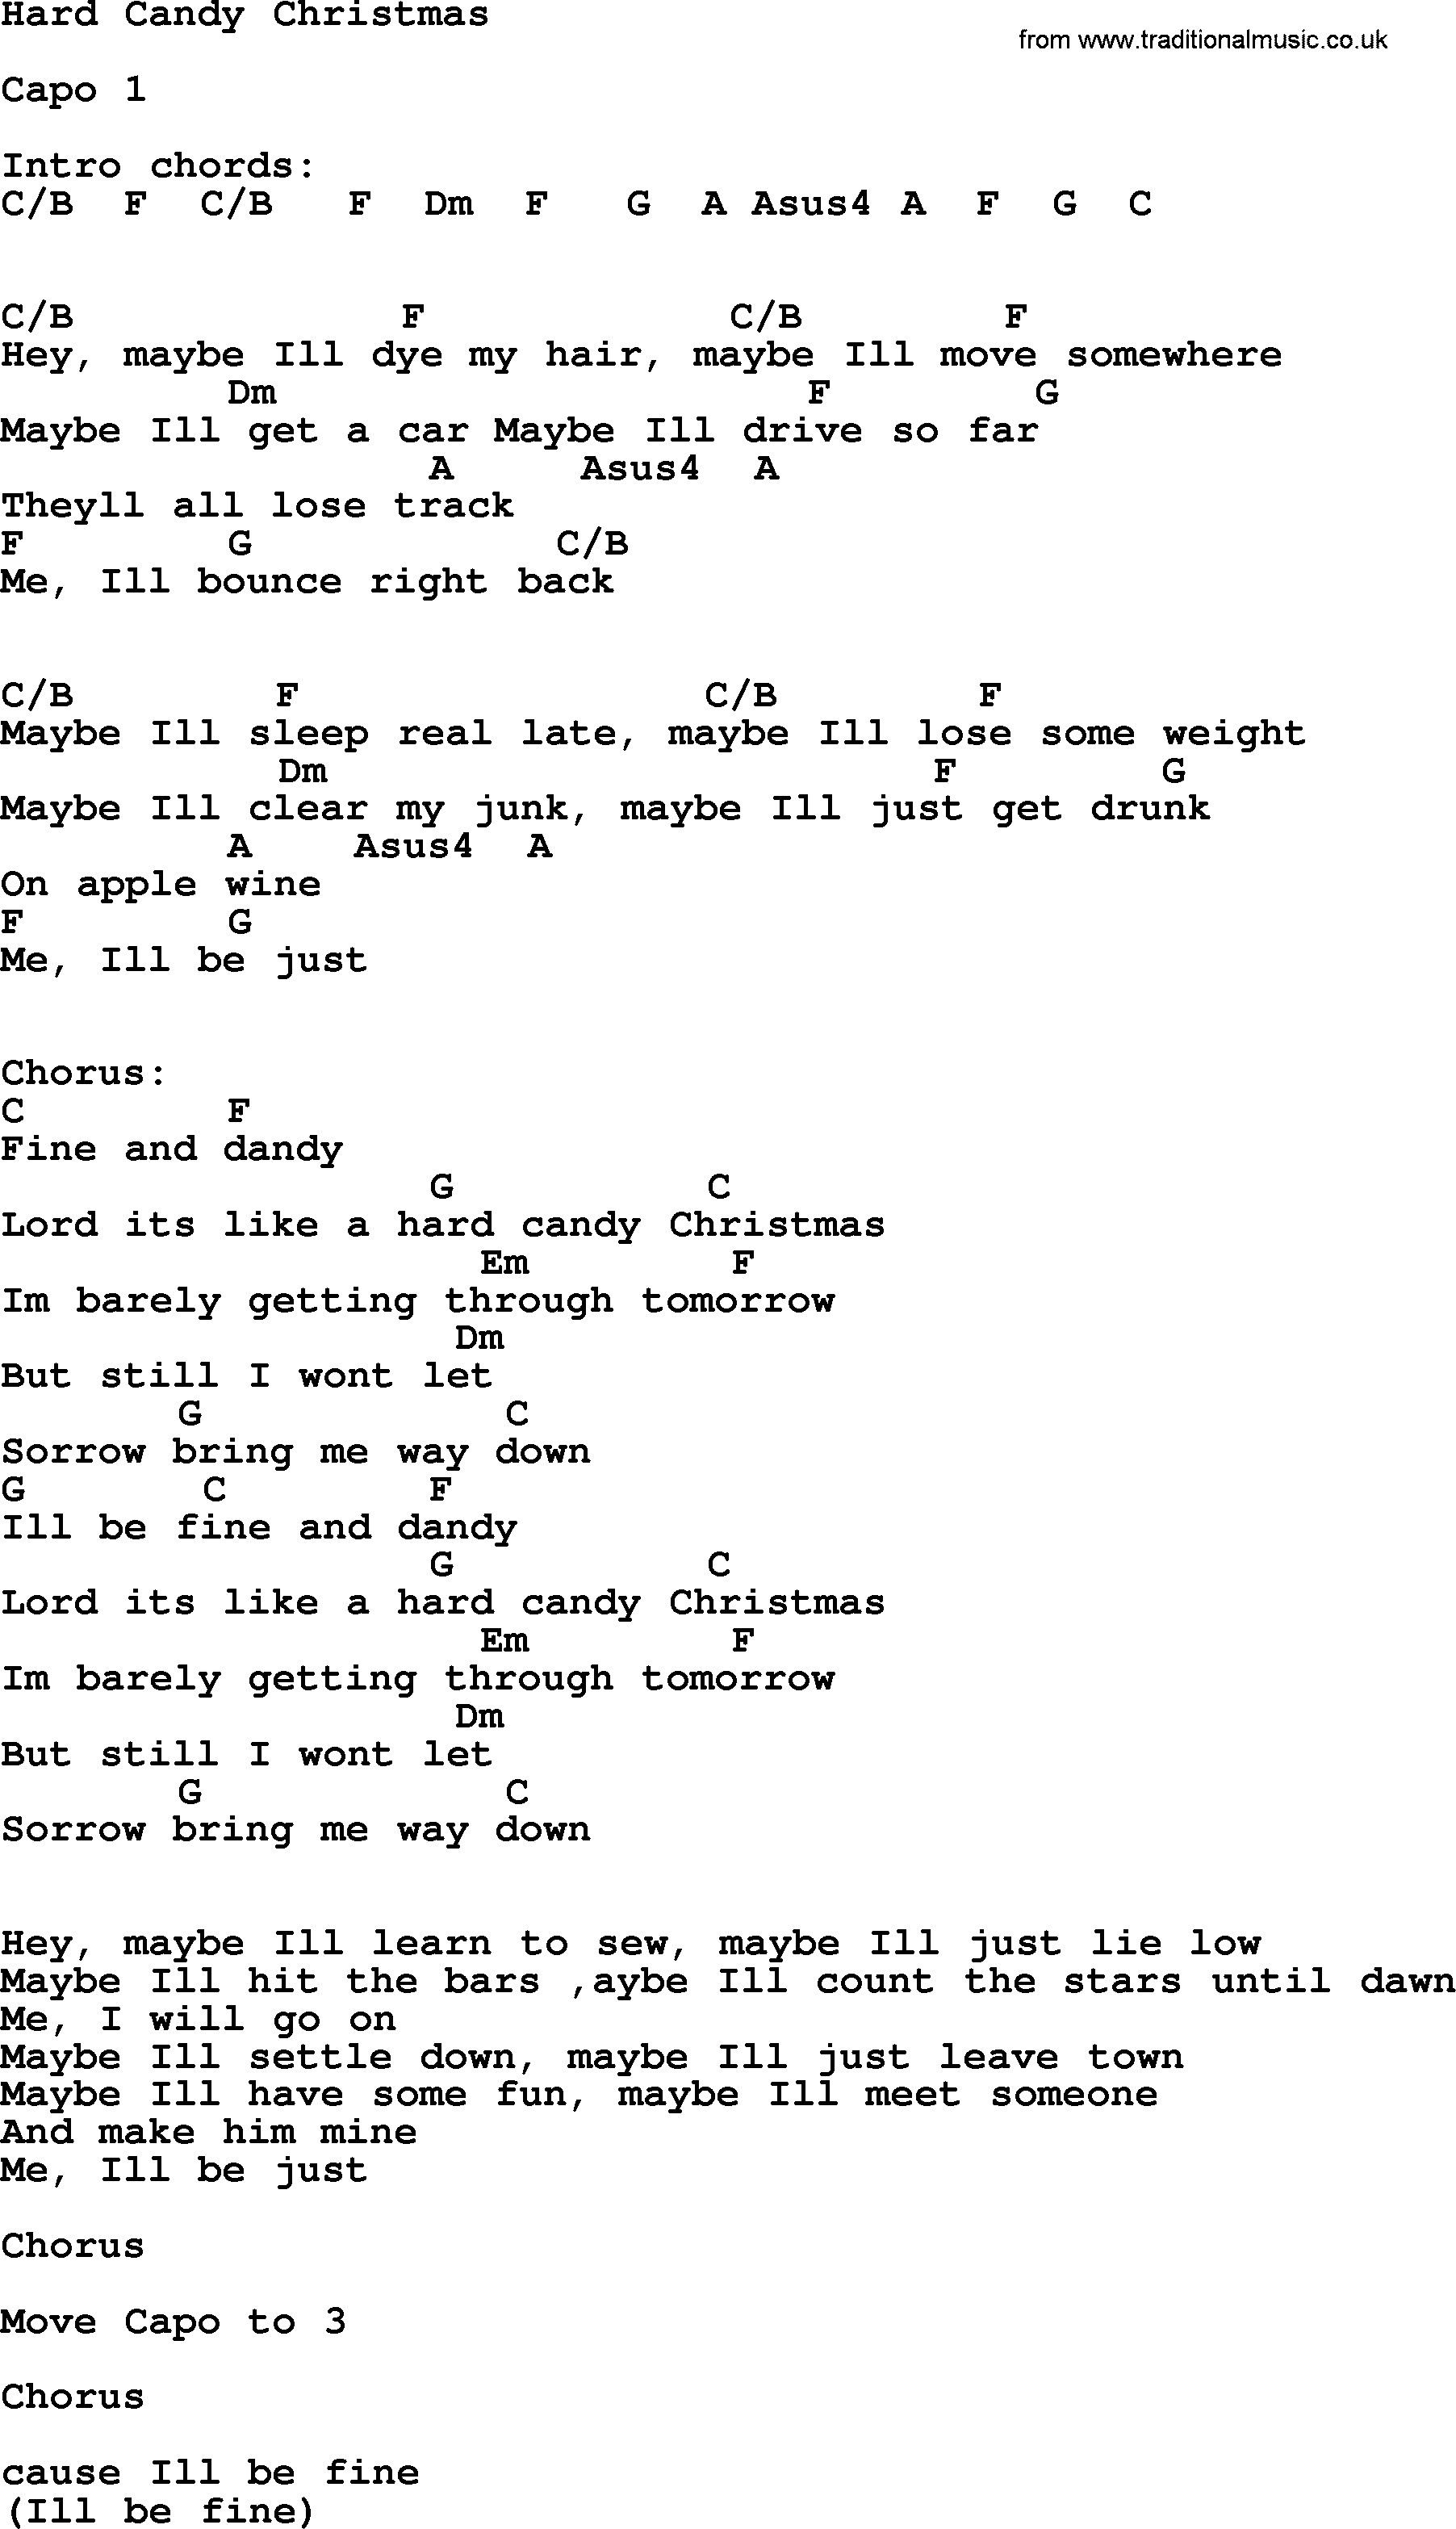 Dolly Parton Hard Candy Christmas Lyrics
 Dolly Parton song Hard Candy Christmas lyrics and chords